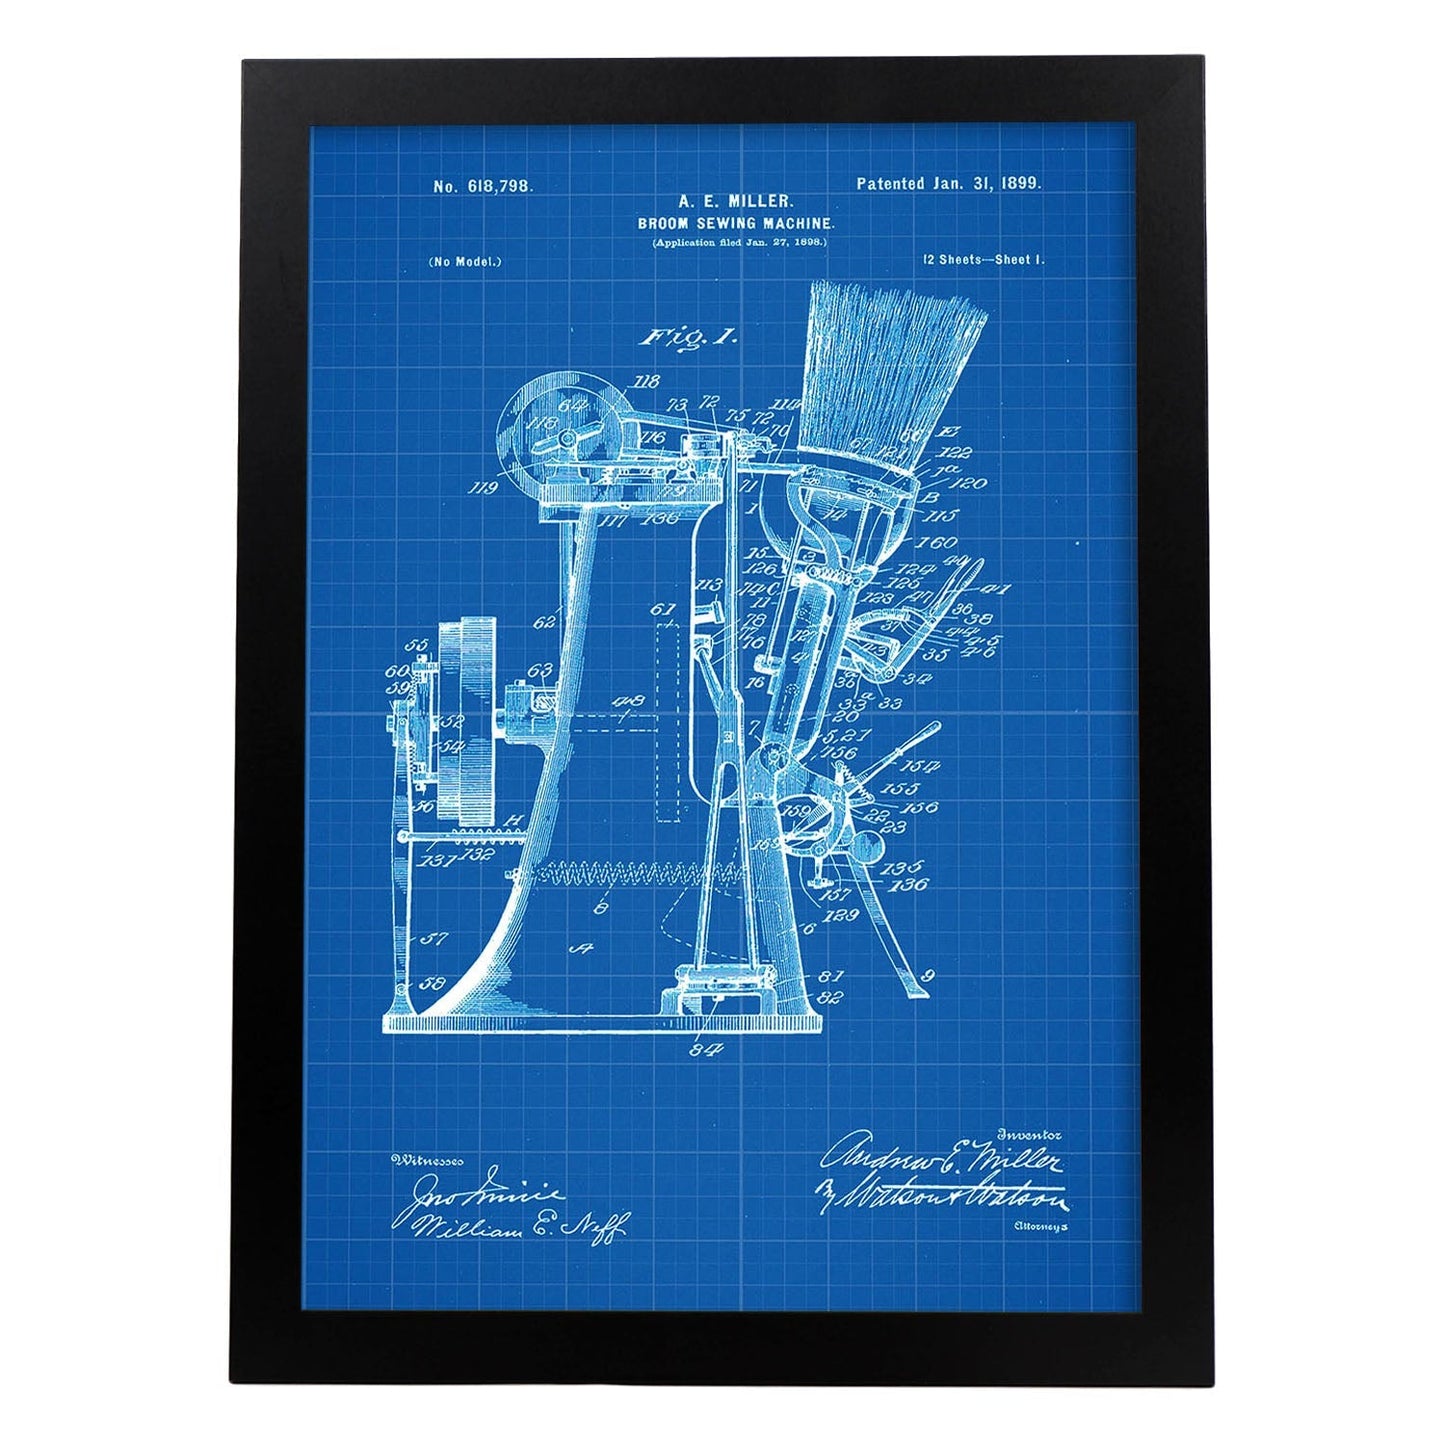 Poster con patente de Maquina de coser escobas. Lámina con diseño de patente antigua-Artwork-Nacnic-A3-Marco Negro-Nacnic Estudio SL